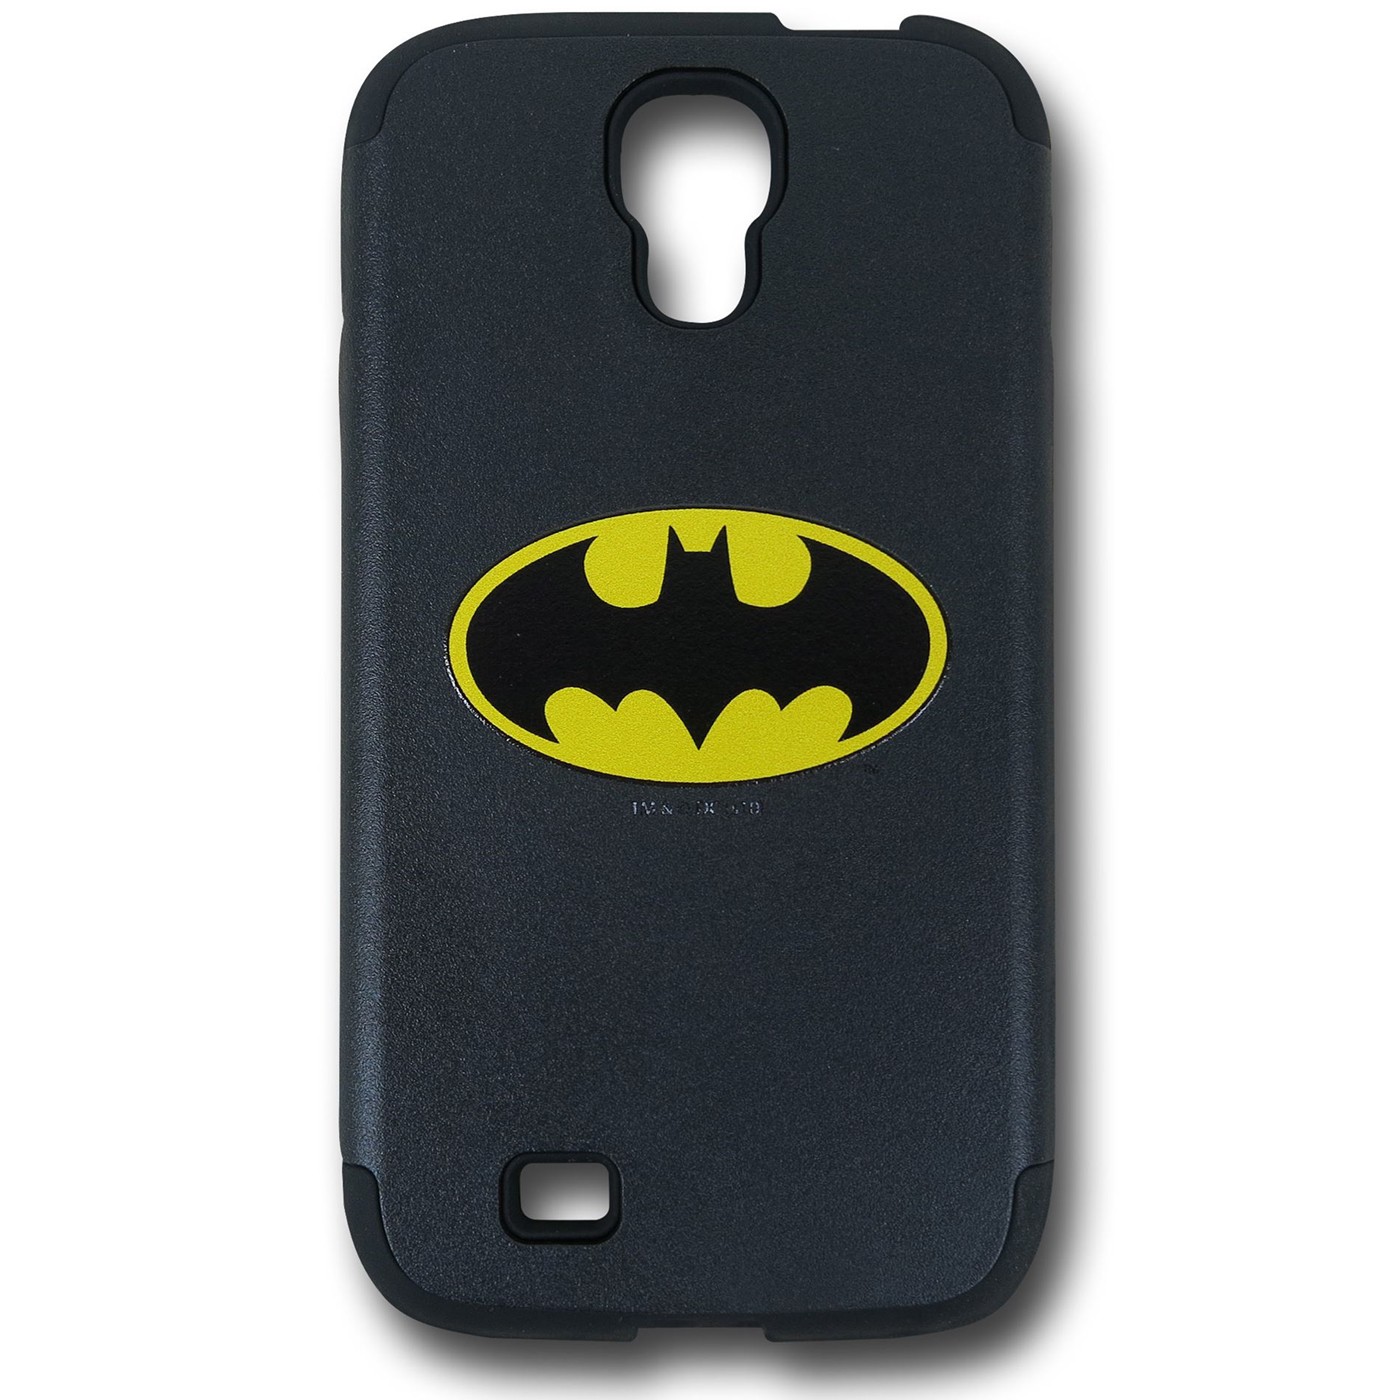 Batman Symbol Galaxy S4 Black Guardian Case